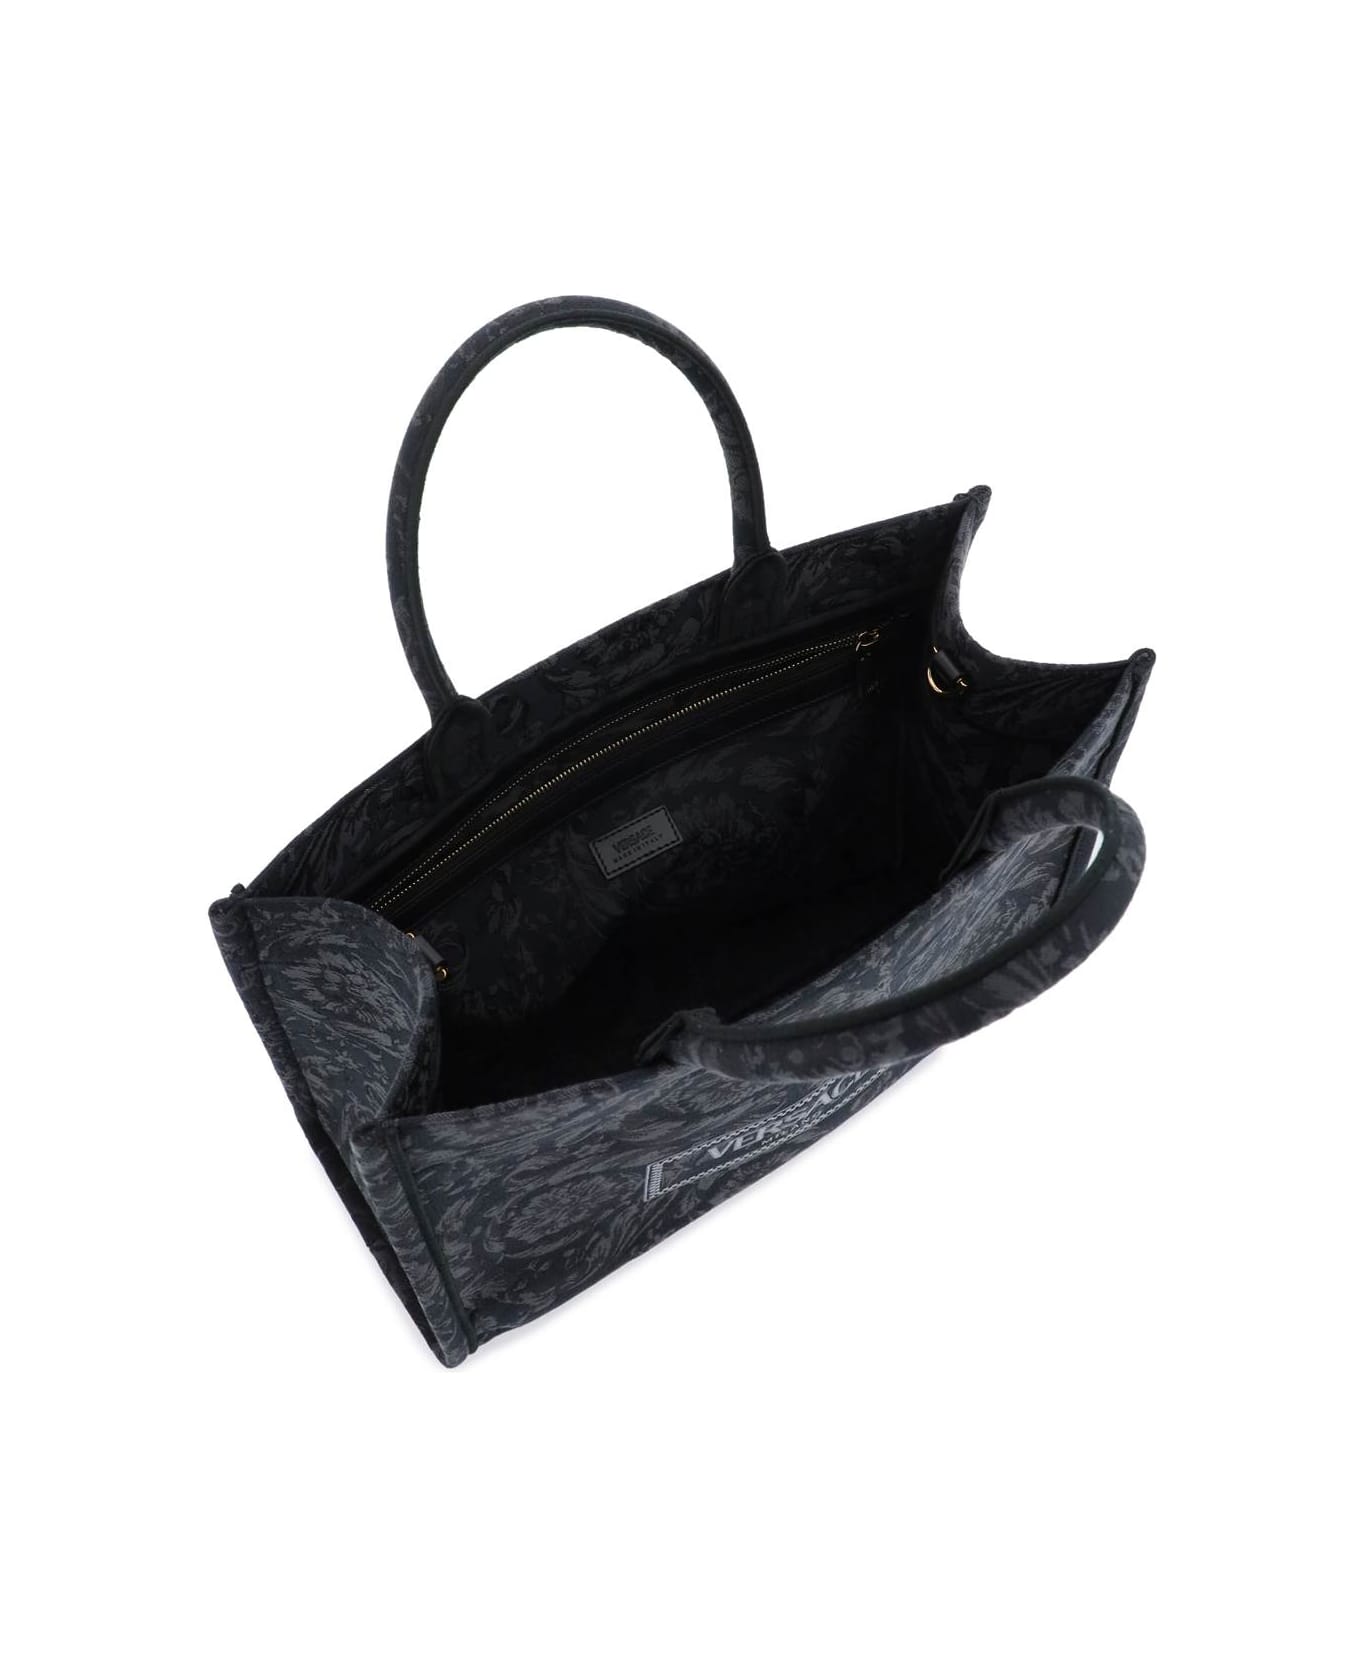 Versace Athena Barocco Tote Bag - BLACK BLACK VERSACE GOLD (Black)